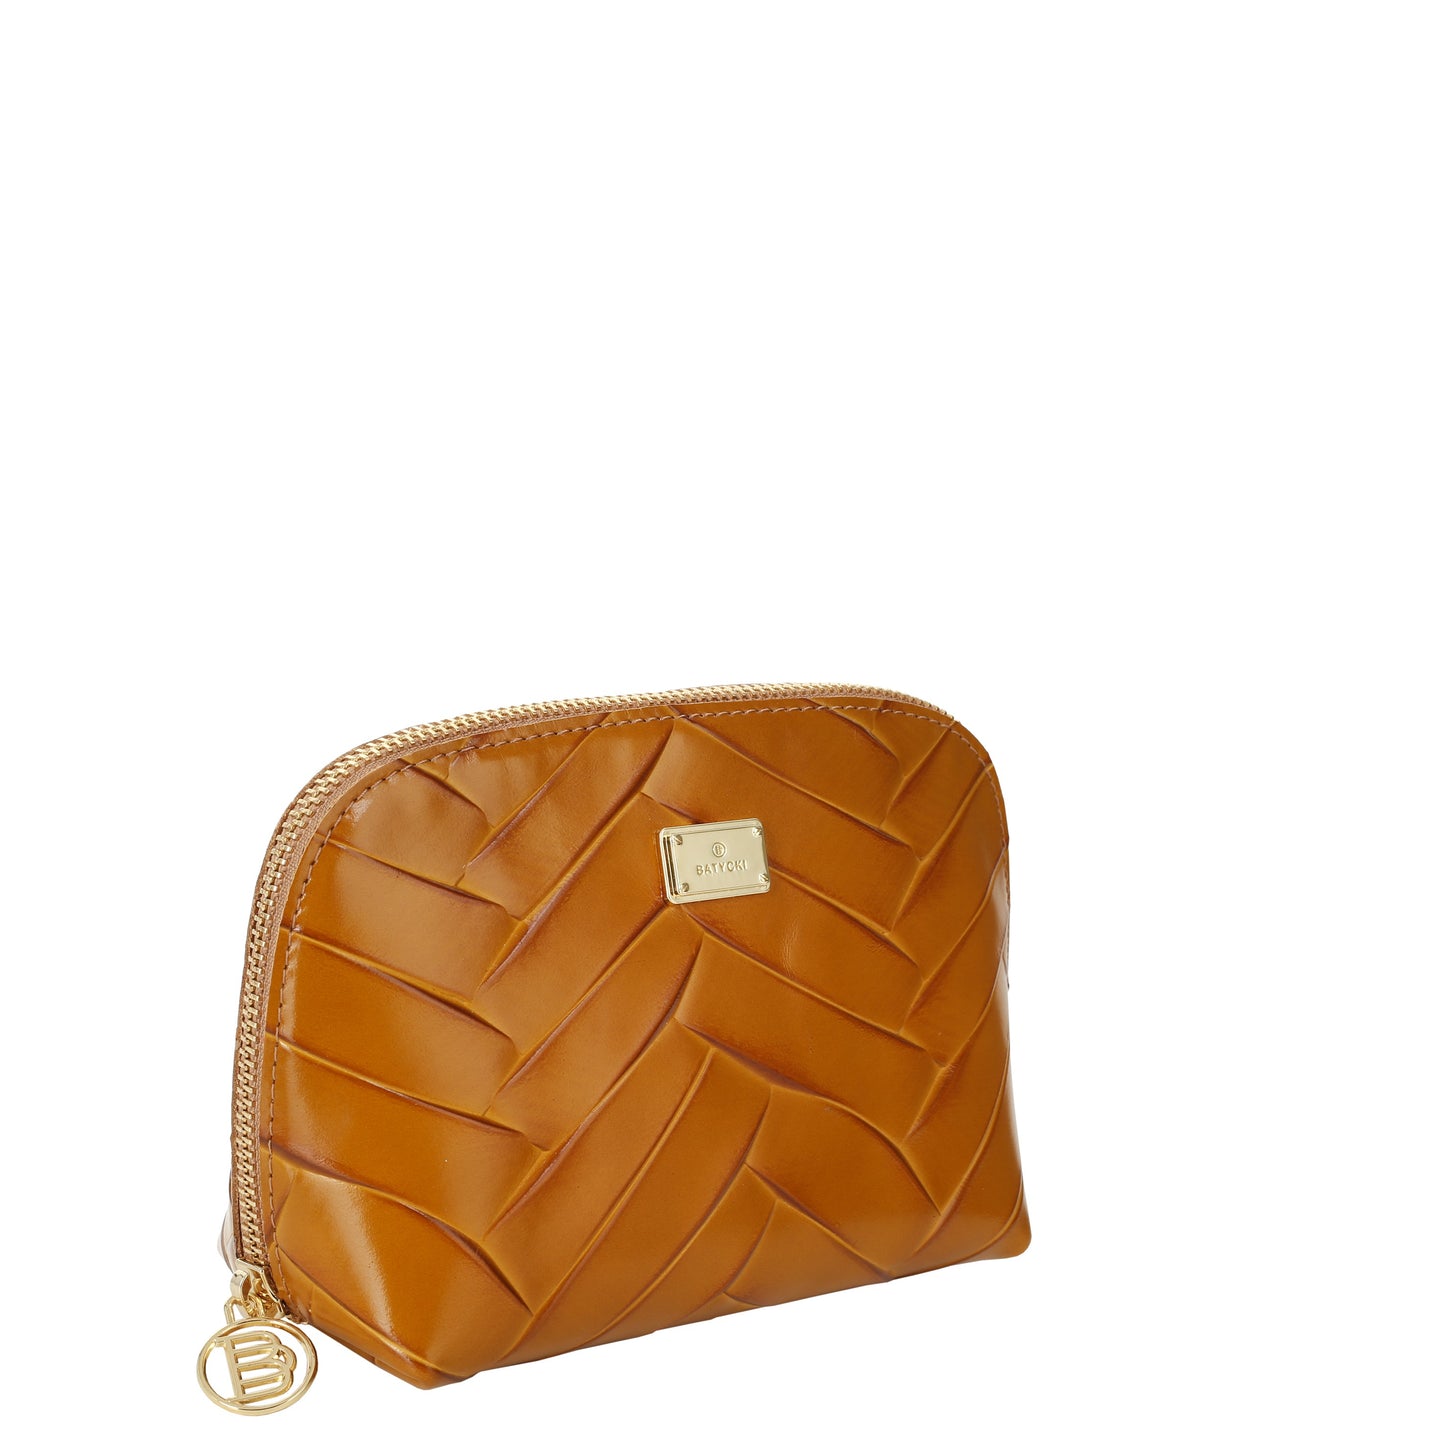 BRAID HONEY leather women's cosmetic bag